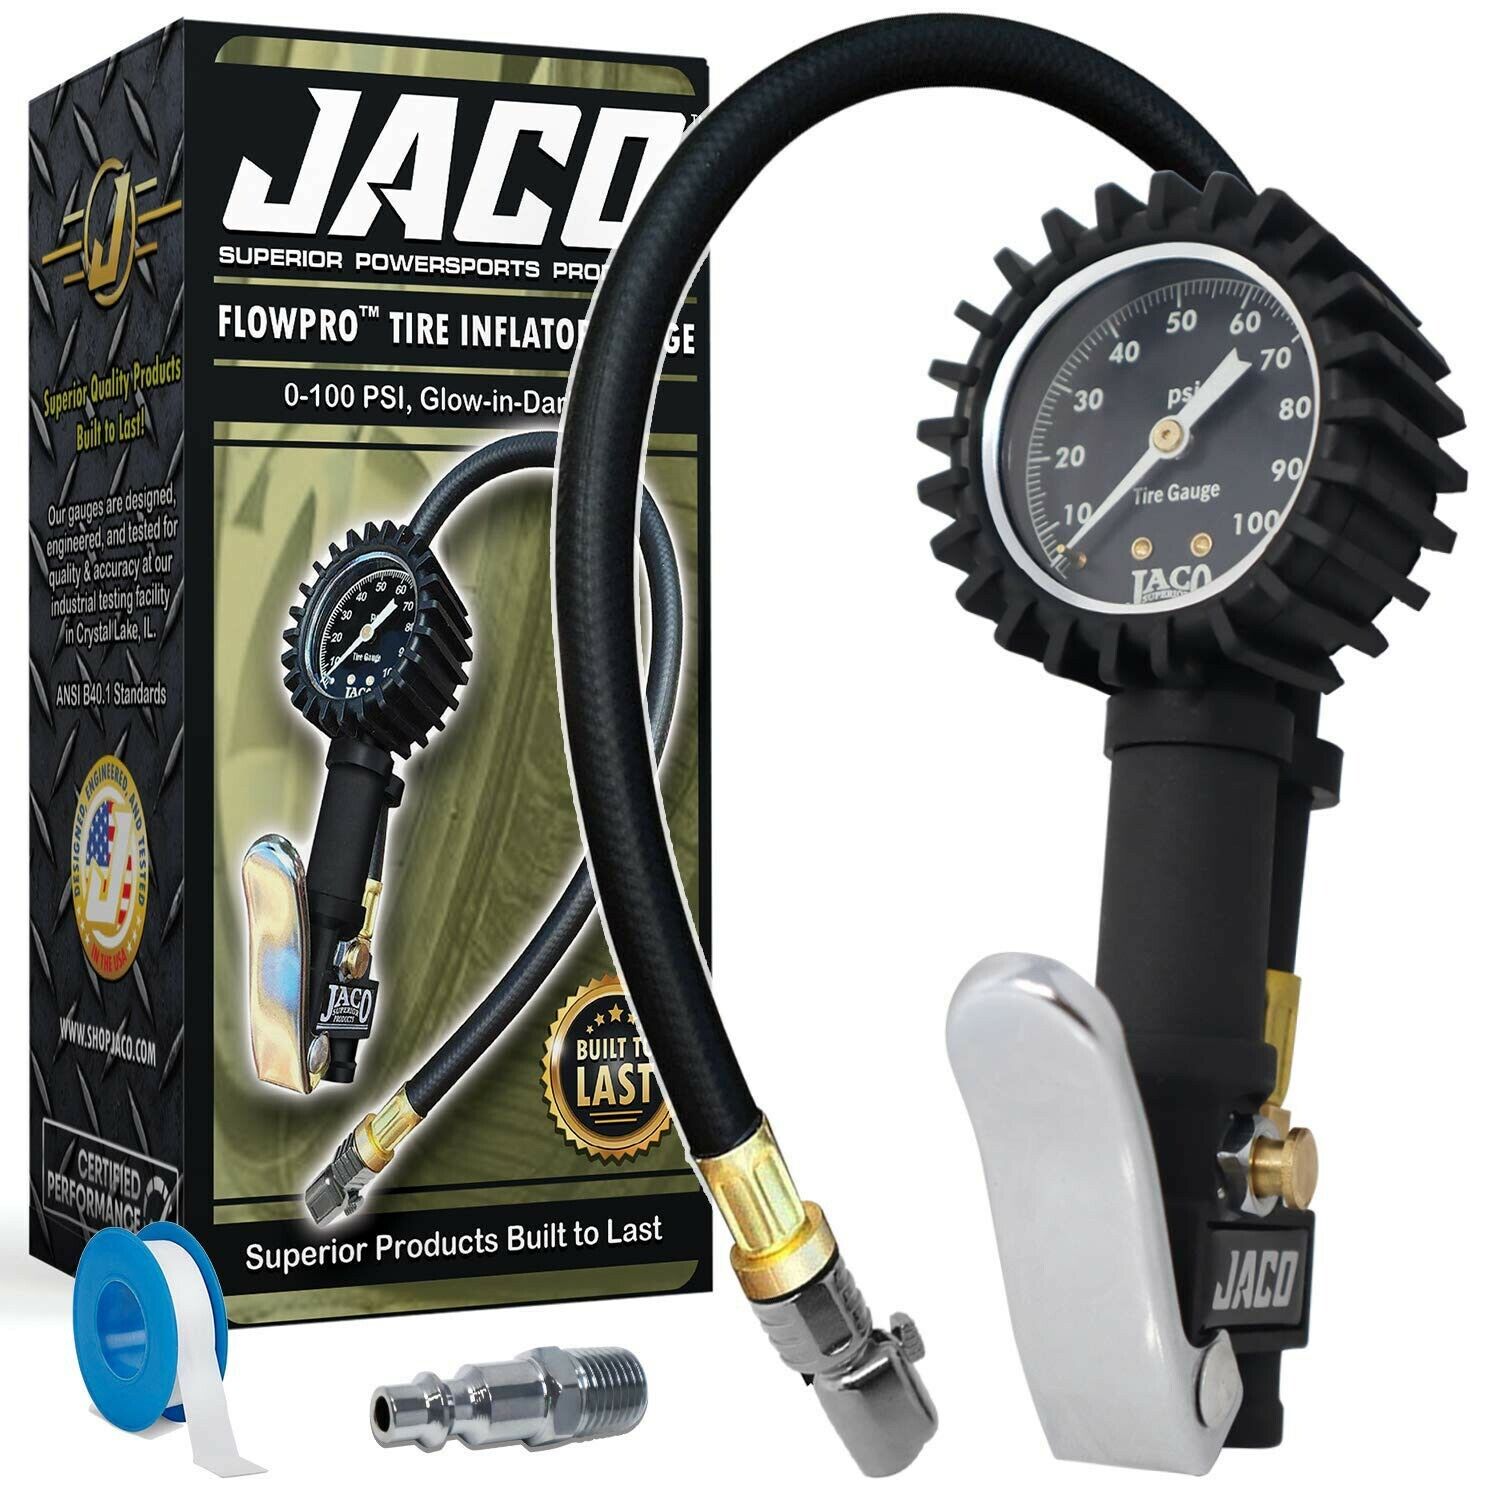 JACO FlowPro™ Tire Inflator with Pressure Gauge - 100 PSI